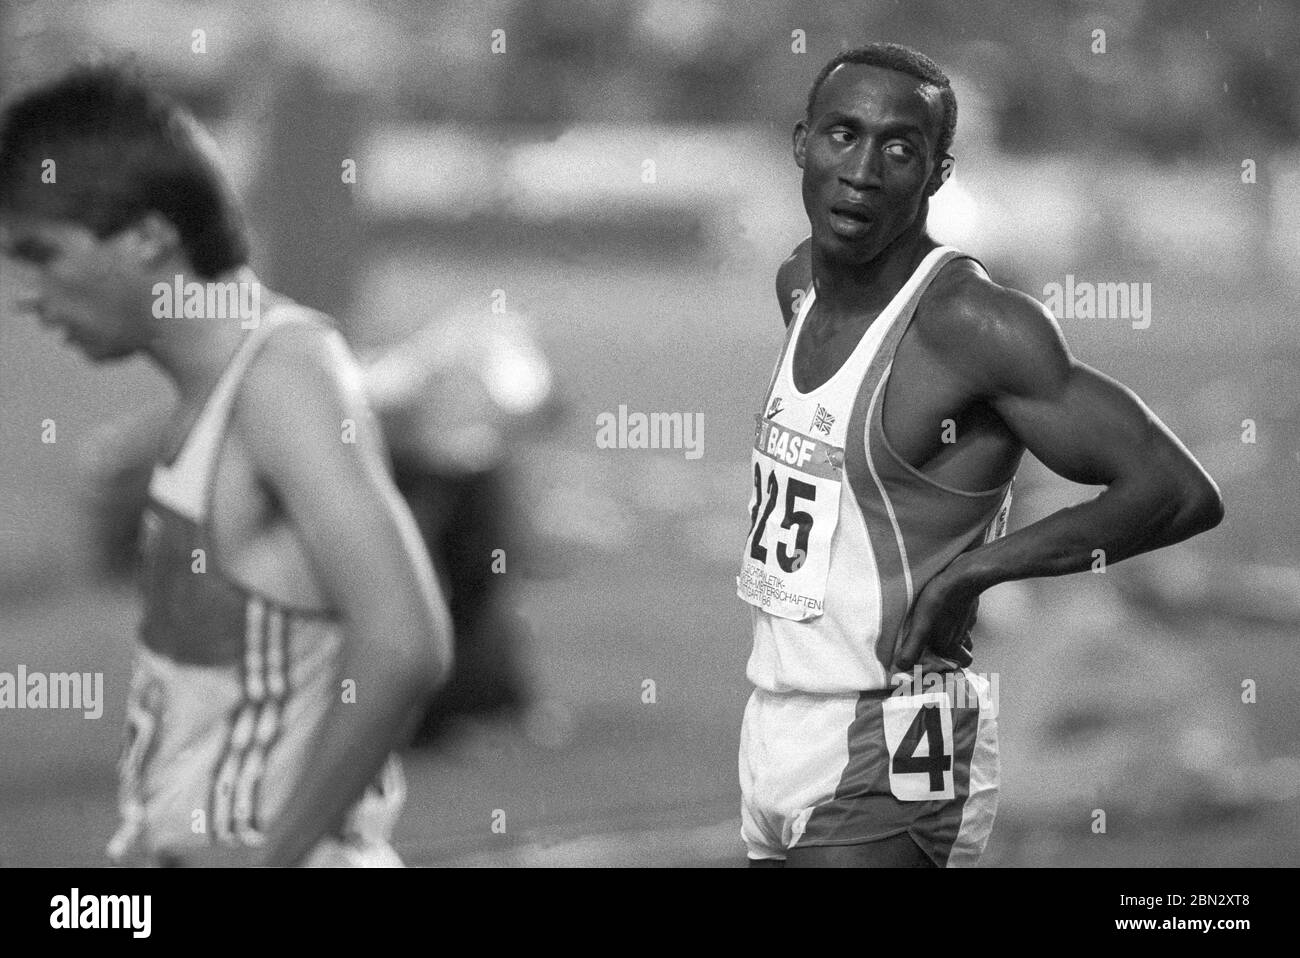 LINFORD CHRISTIE British sprinter winning the 100m final in European Championship in Stuttgart Germany 1986 Stock Photo